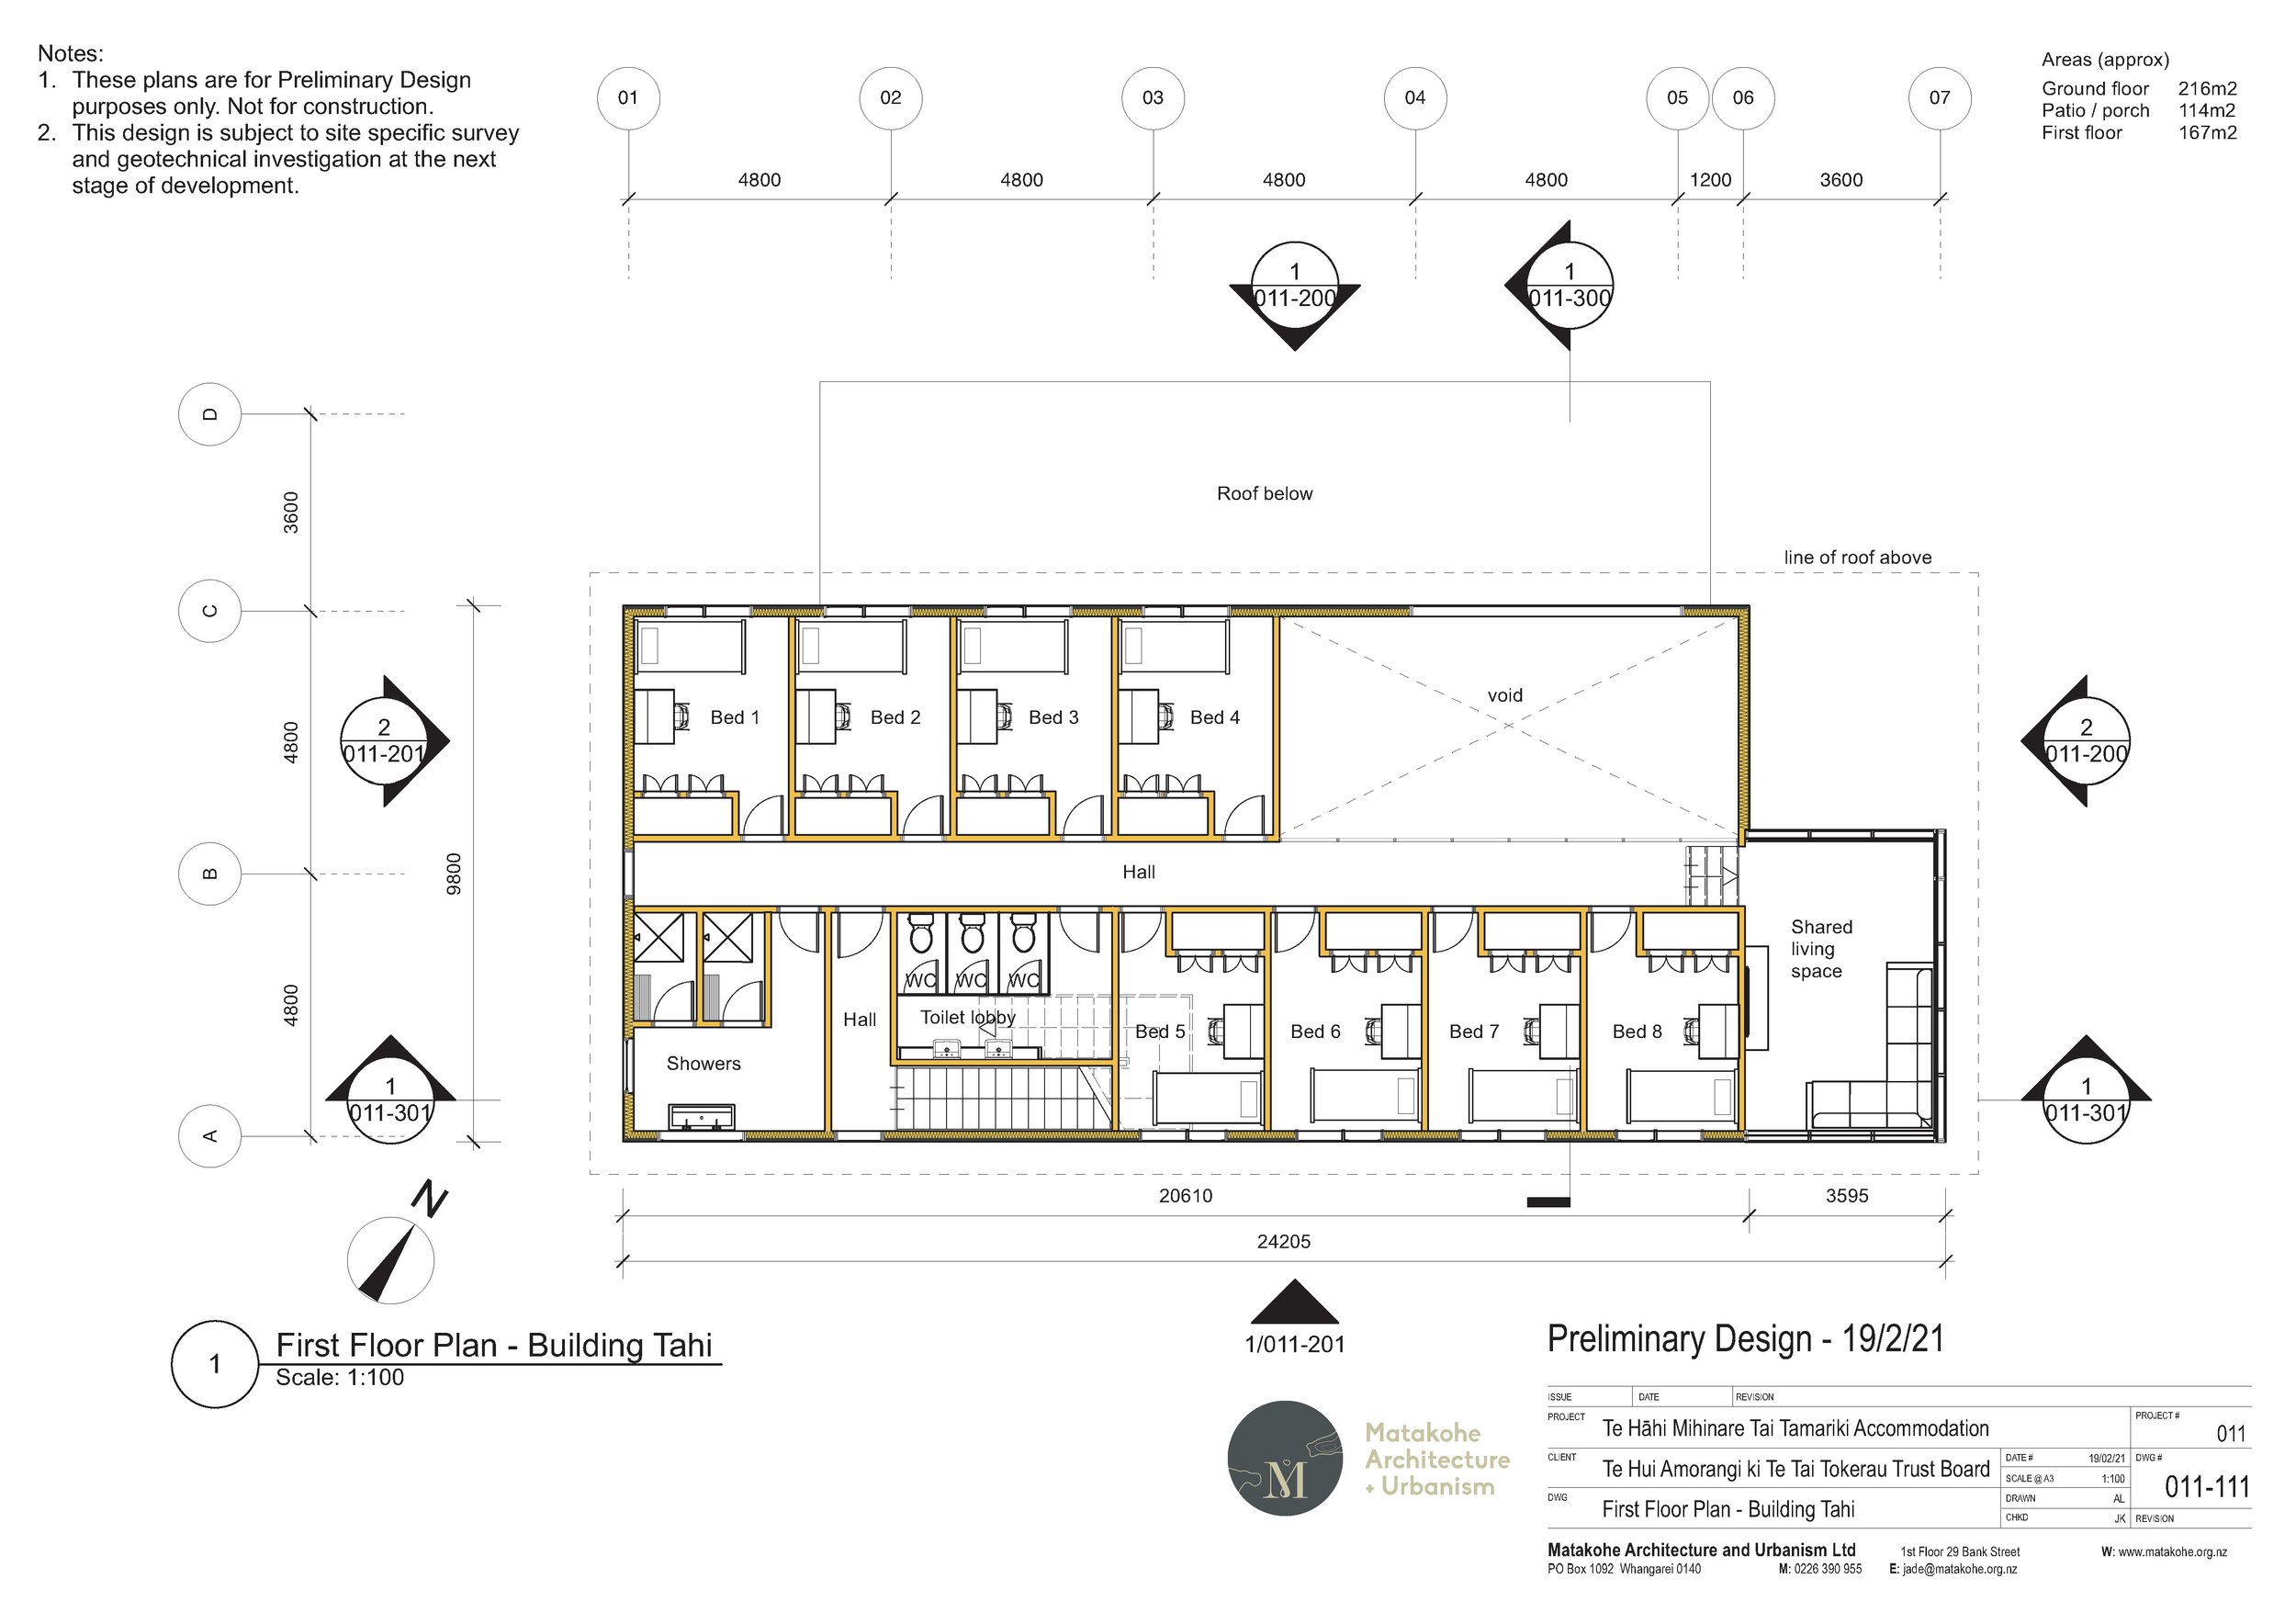 TTA_First Floor Plan - Building Tahi.jpg